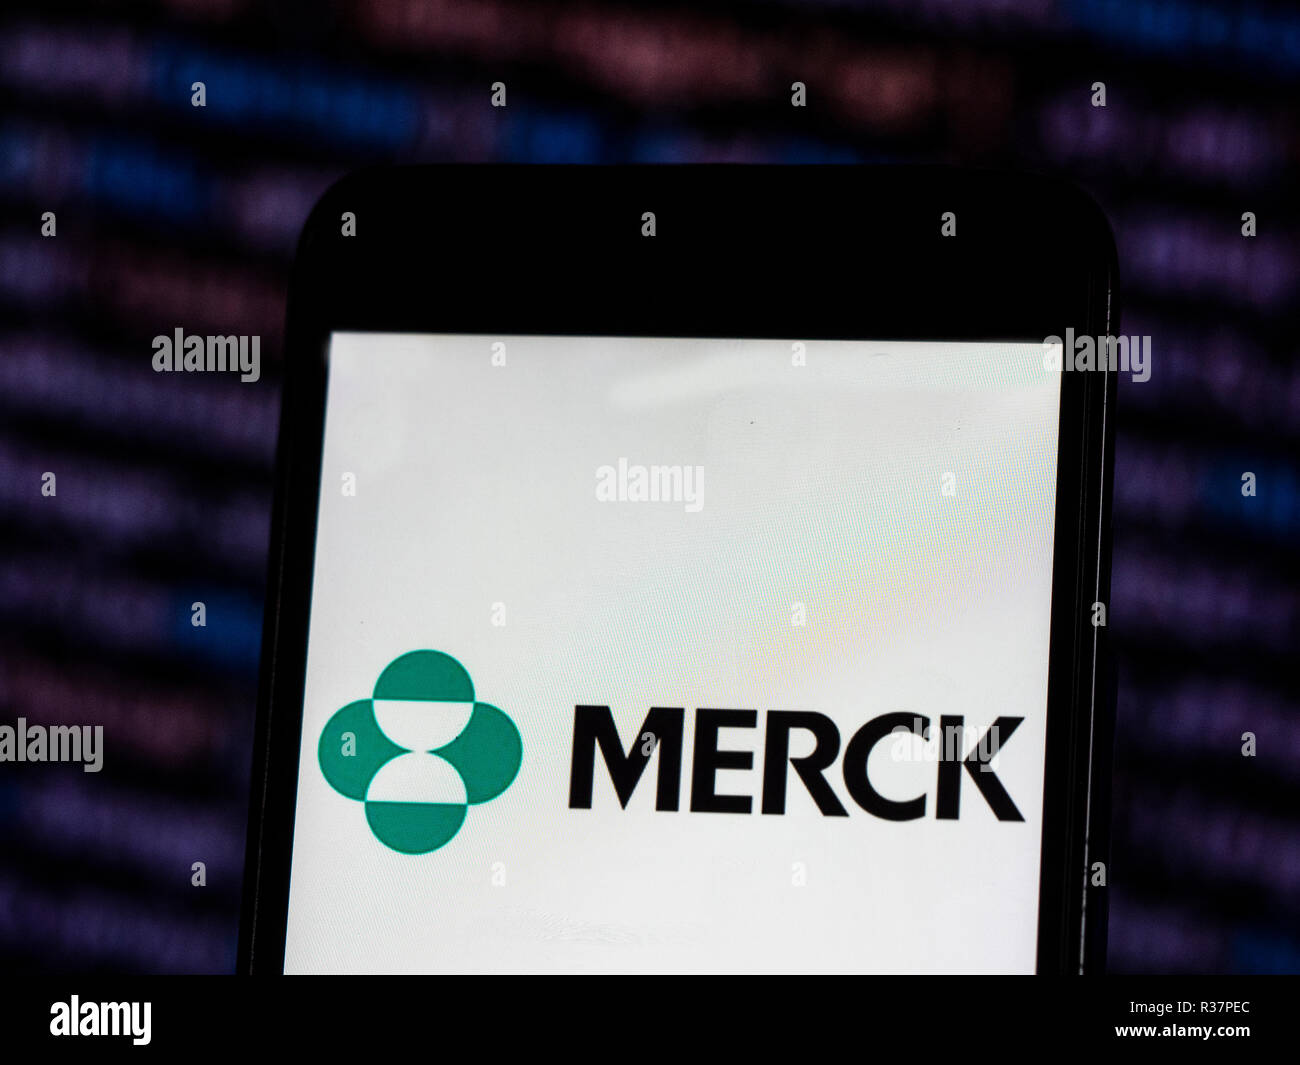 Merck & Co. Pharmaceutical company logo seen displayed on smart phone. Merck & Company, Inc., d.b.a. Merck Sharp & Dohme outside the United States and Canada, is an American pharmaceutical company and one of the largest pharmaceutical companies in the world. Stock Photo